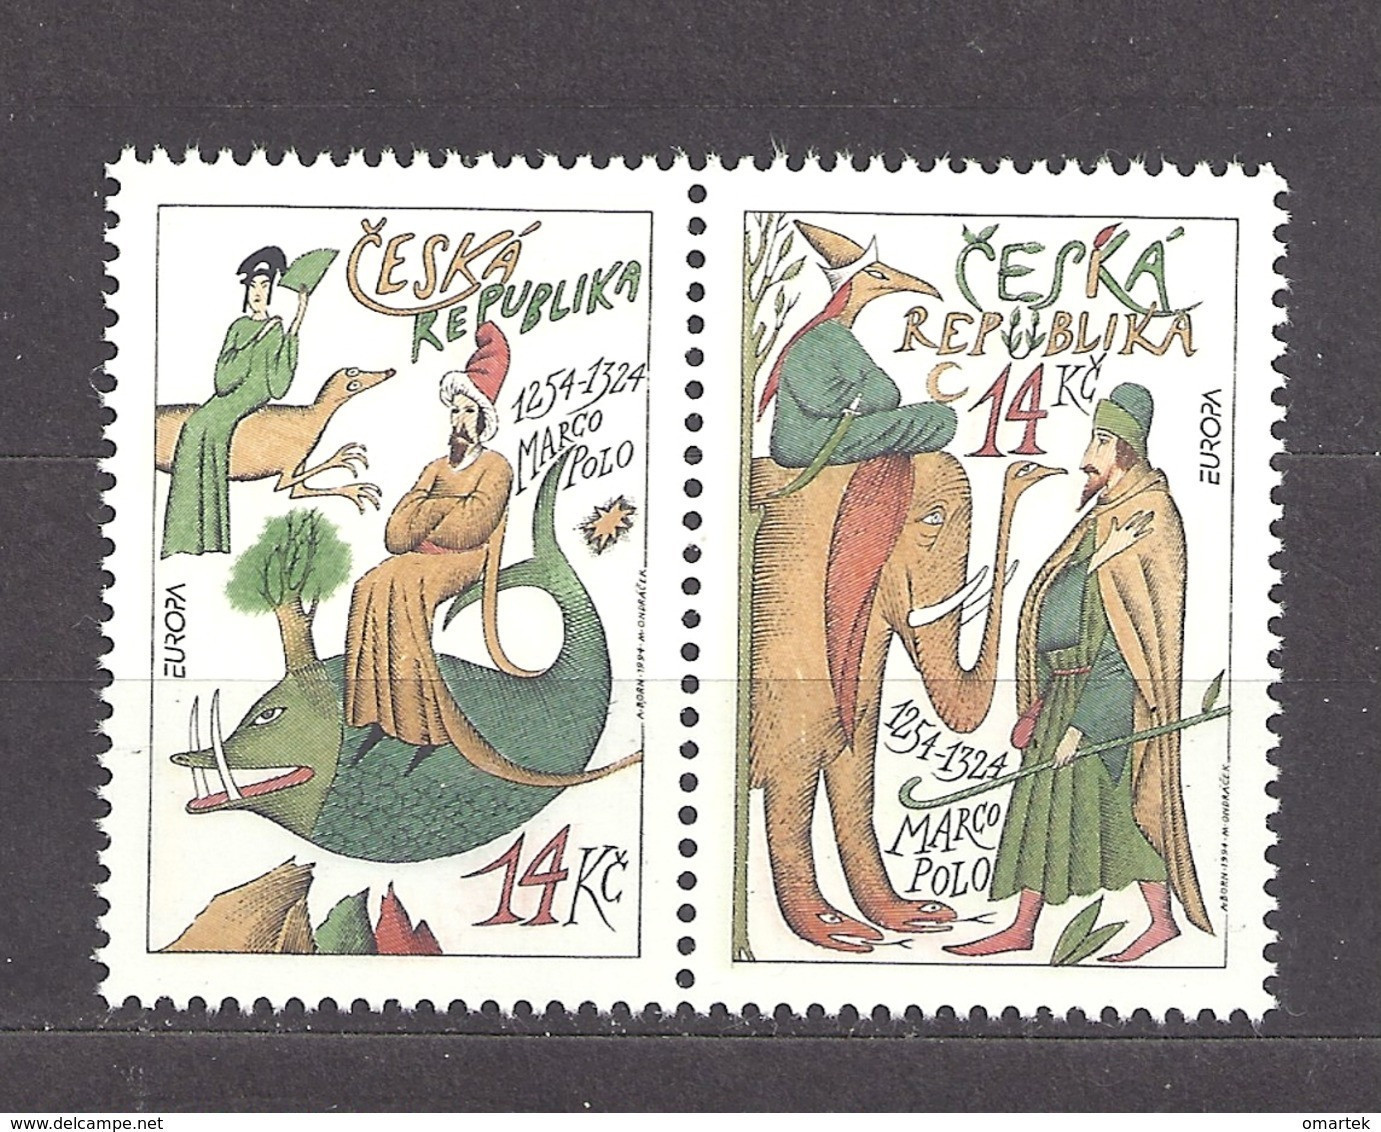 Czech Republic 1994 MNH ** Mi 36-37 Sc 2916-2917 EUROPA - Marco Polo. Adolf Born. Tschechische Republik. - Unused Stamps